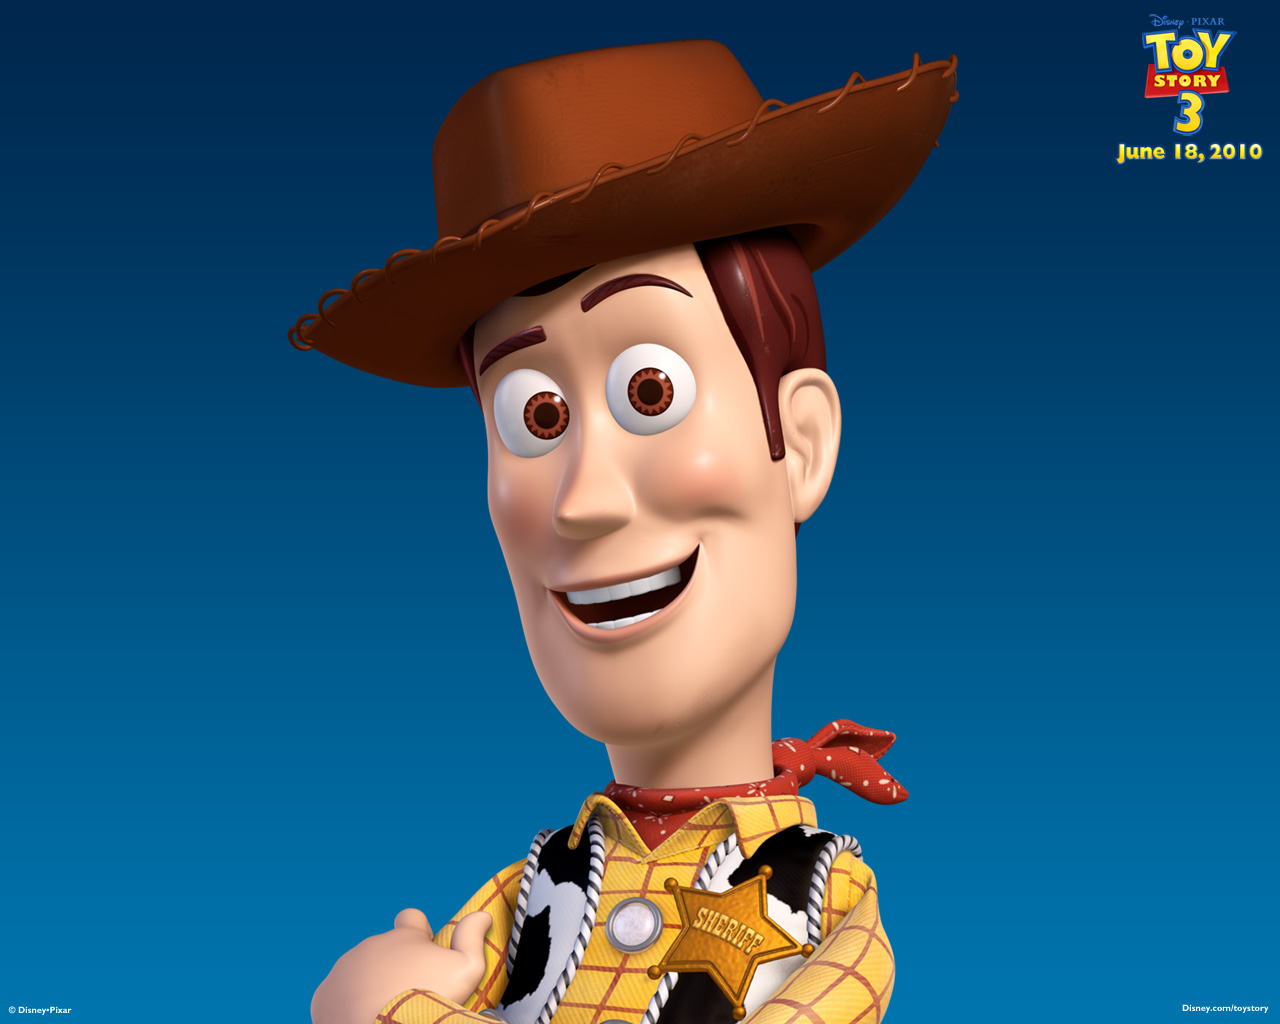 "Toy Story 3" desktop wallpaper number 2 (1280 x 1024 pixels)